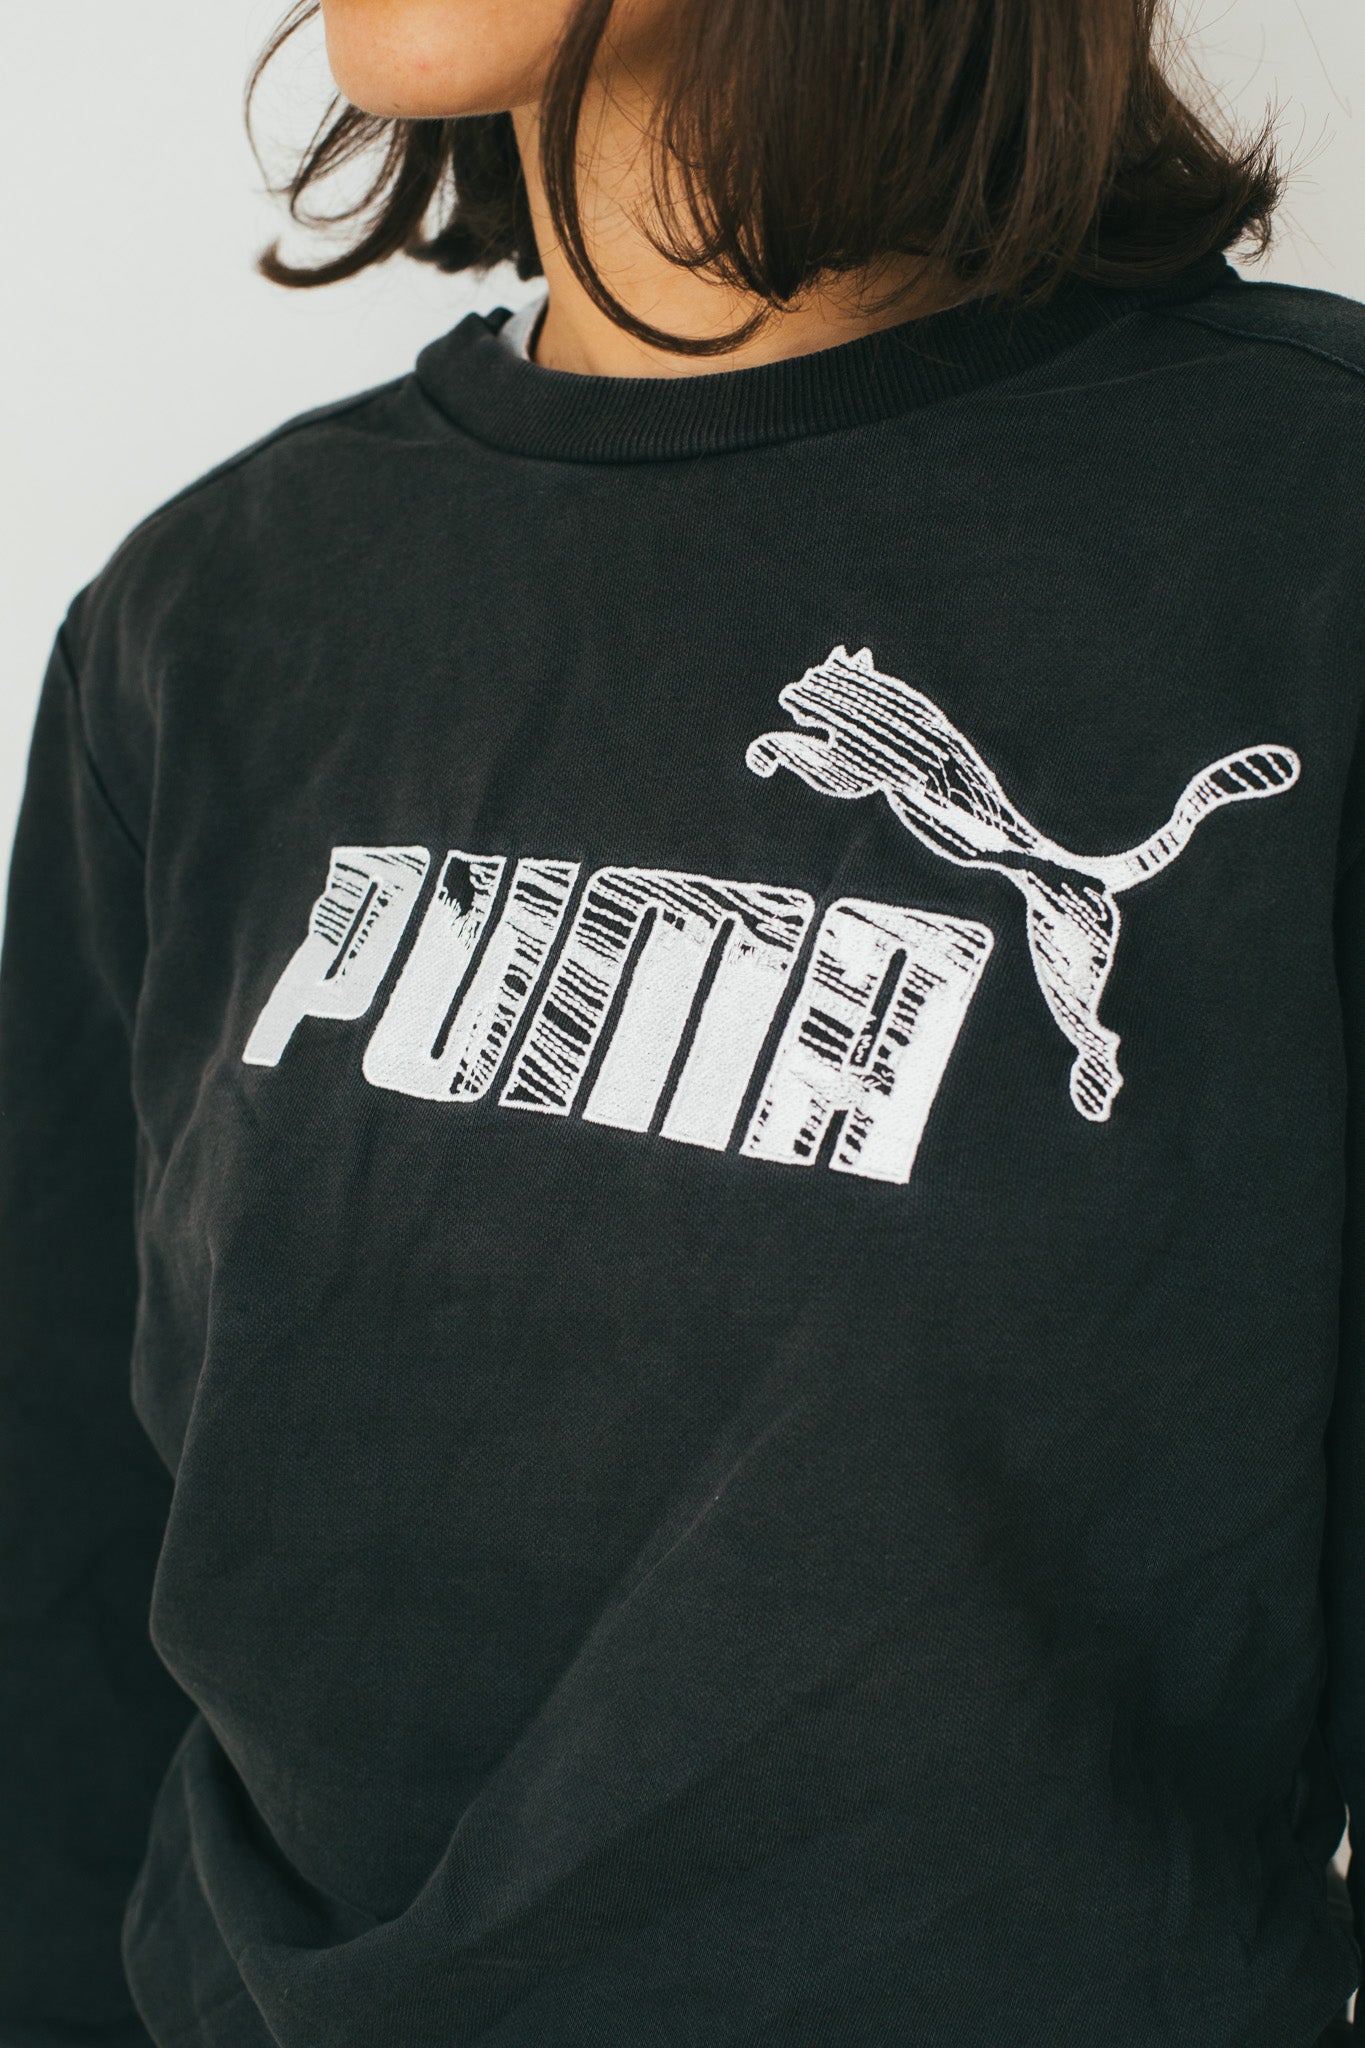 Puma - Sweatshirt